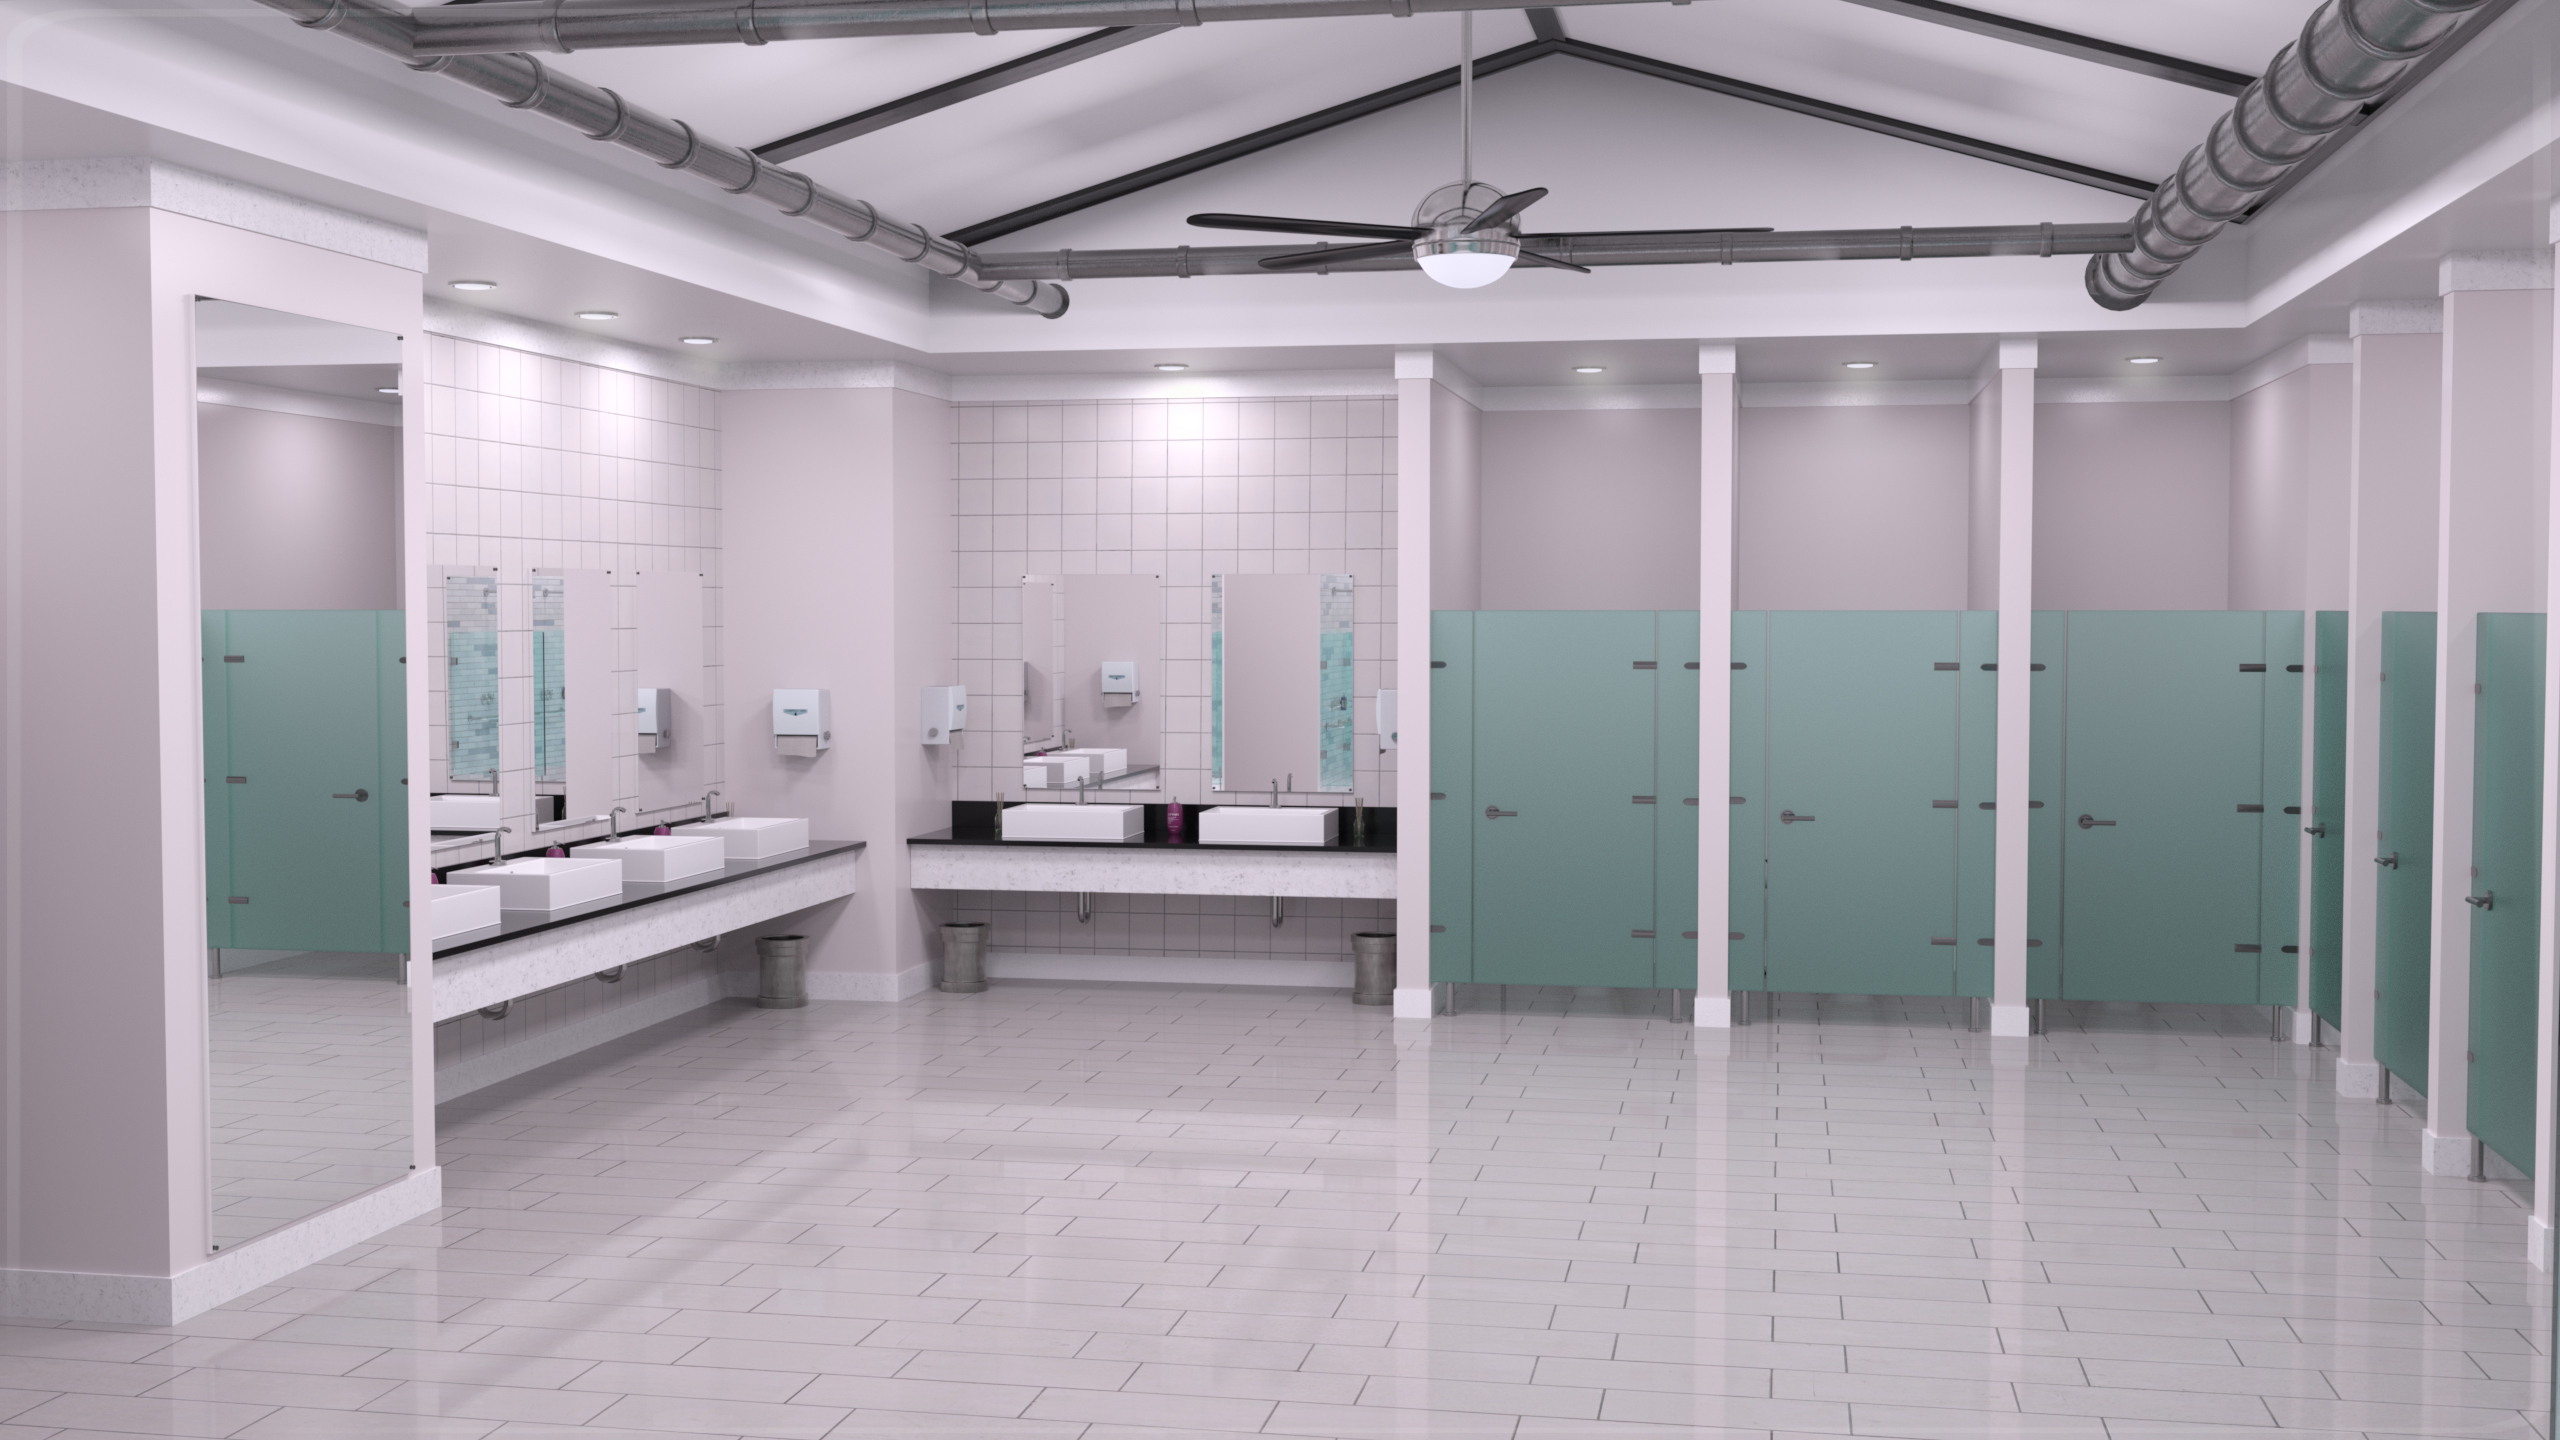 Z Shower and Lavatory Environment by: Zeddicuss, 3D Models by Daz 3D